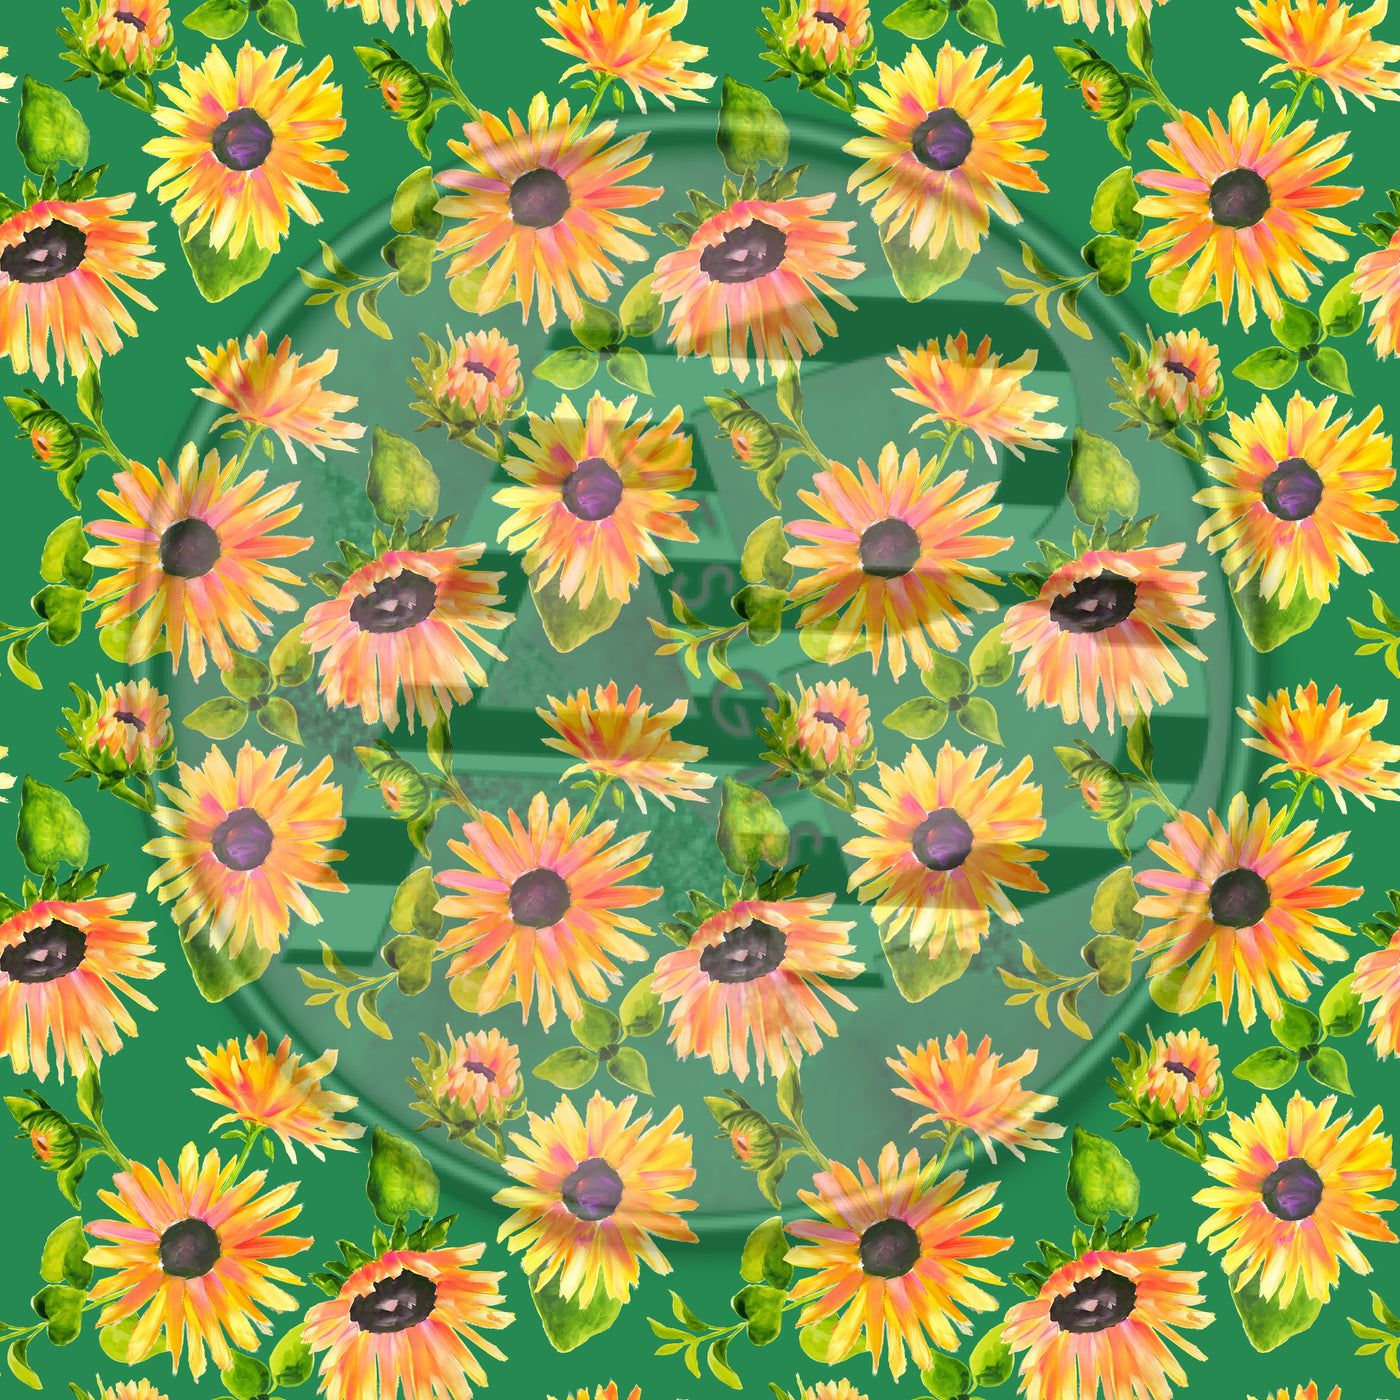 Adhesive Patterned Vinyl - Sunflower 2174